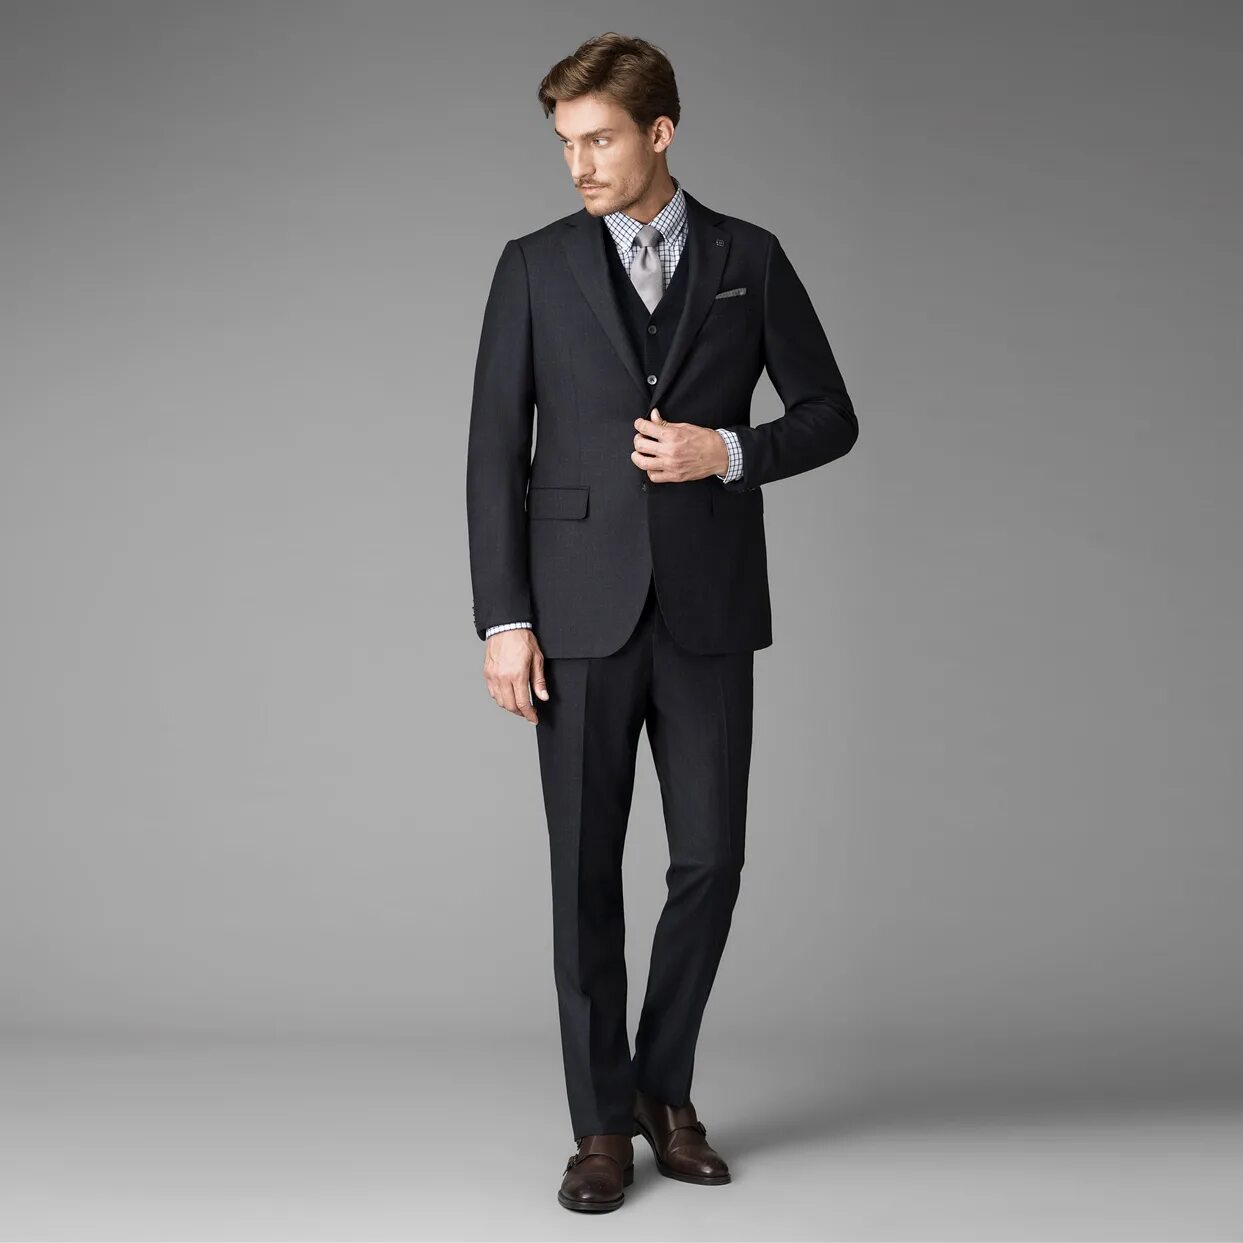 Henderson синий костюм 2022. Костюм мужской классический. Черный классический костюм мужской. Черный костюм неклассический.